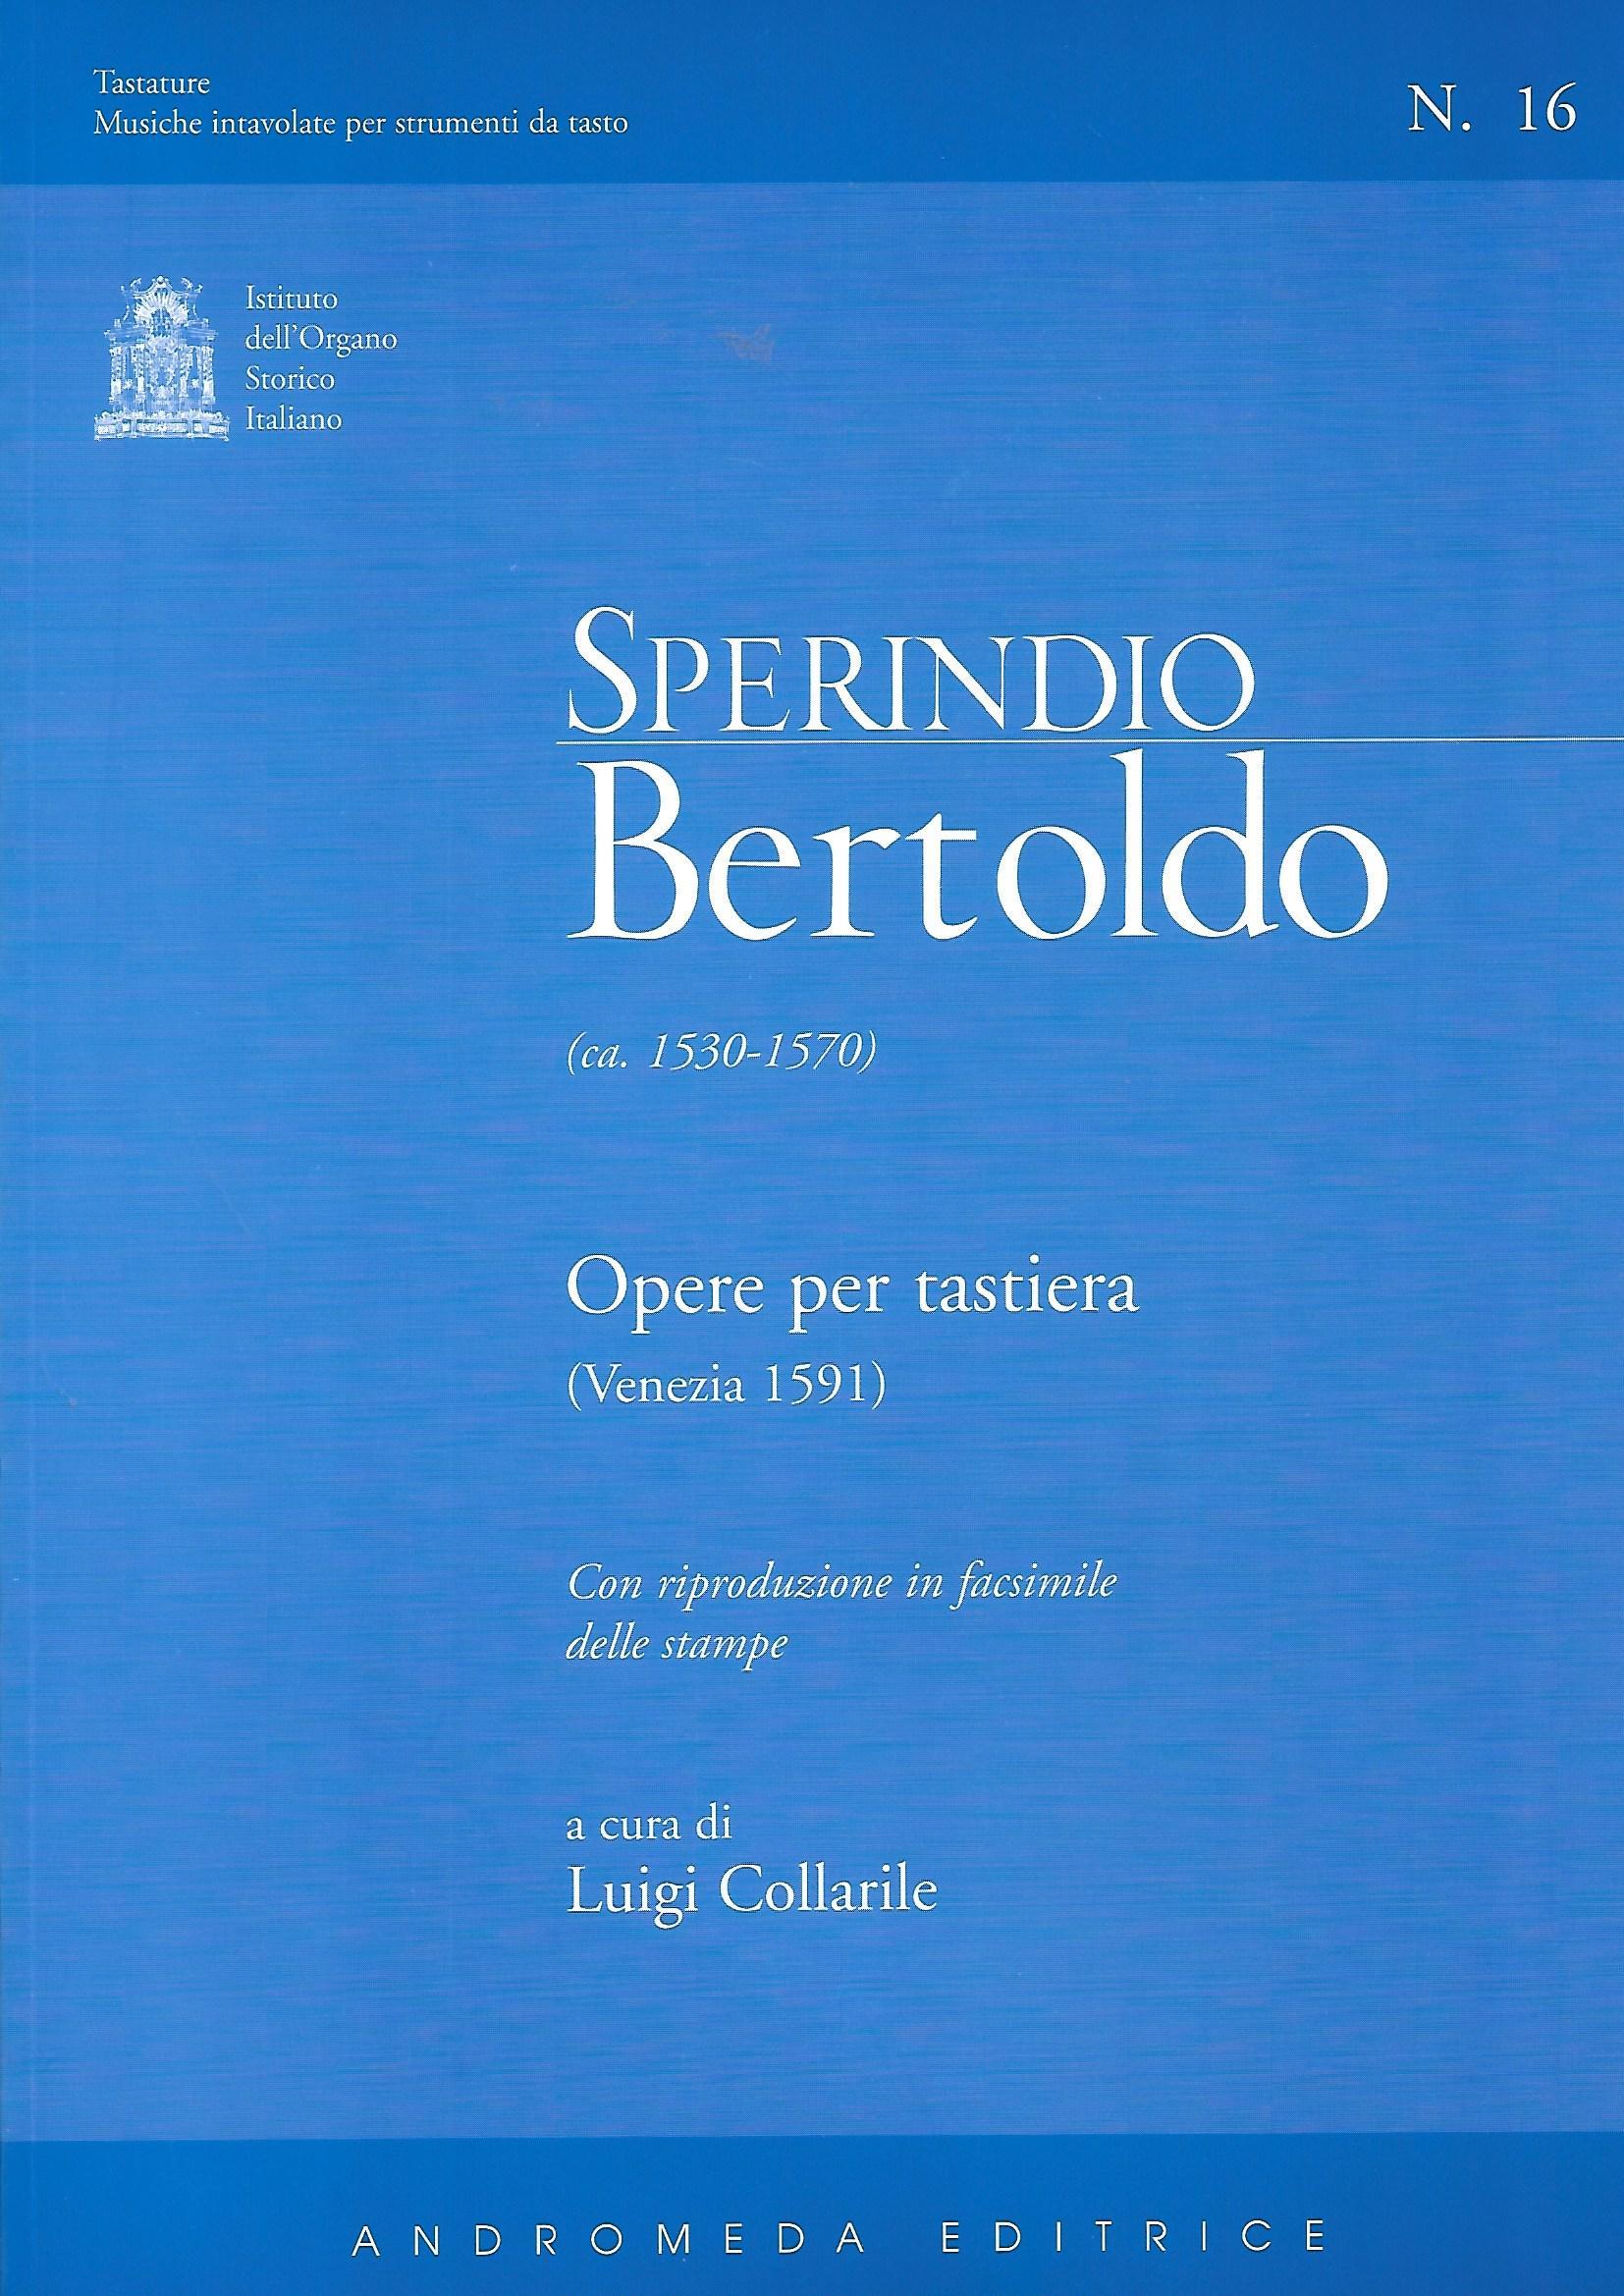 Ta16 Sperindio Bertoldo - opere per tastiera (Venezia 1591)